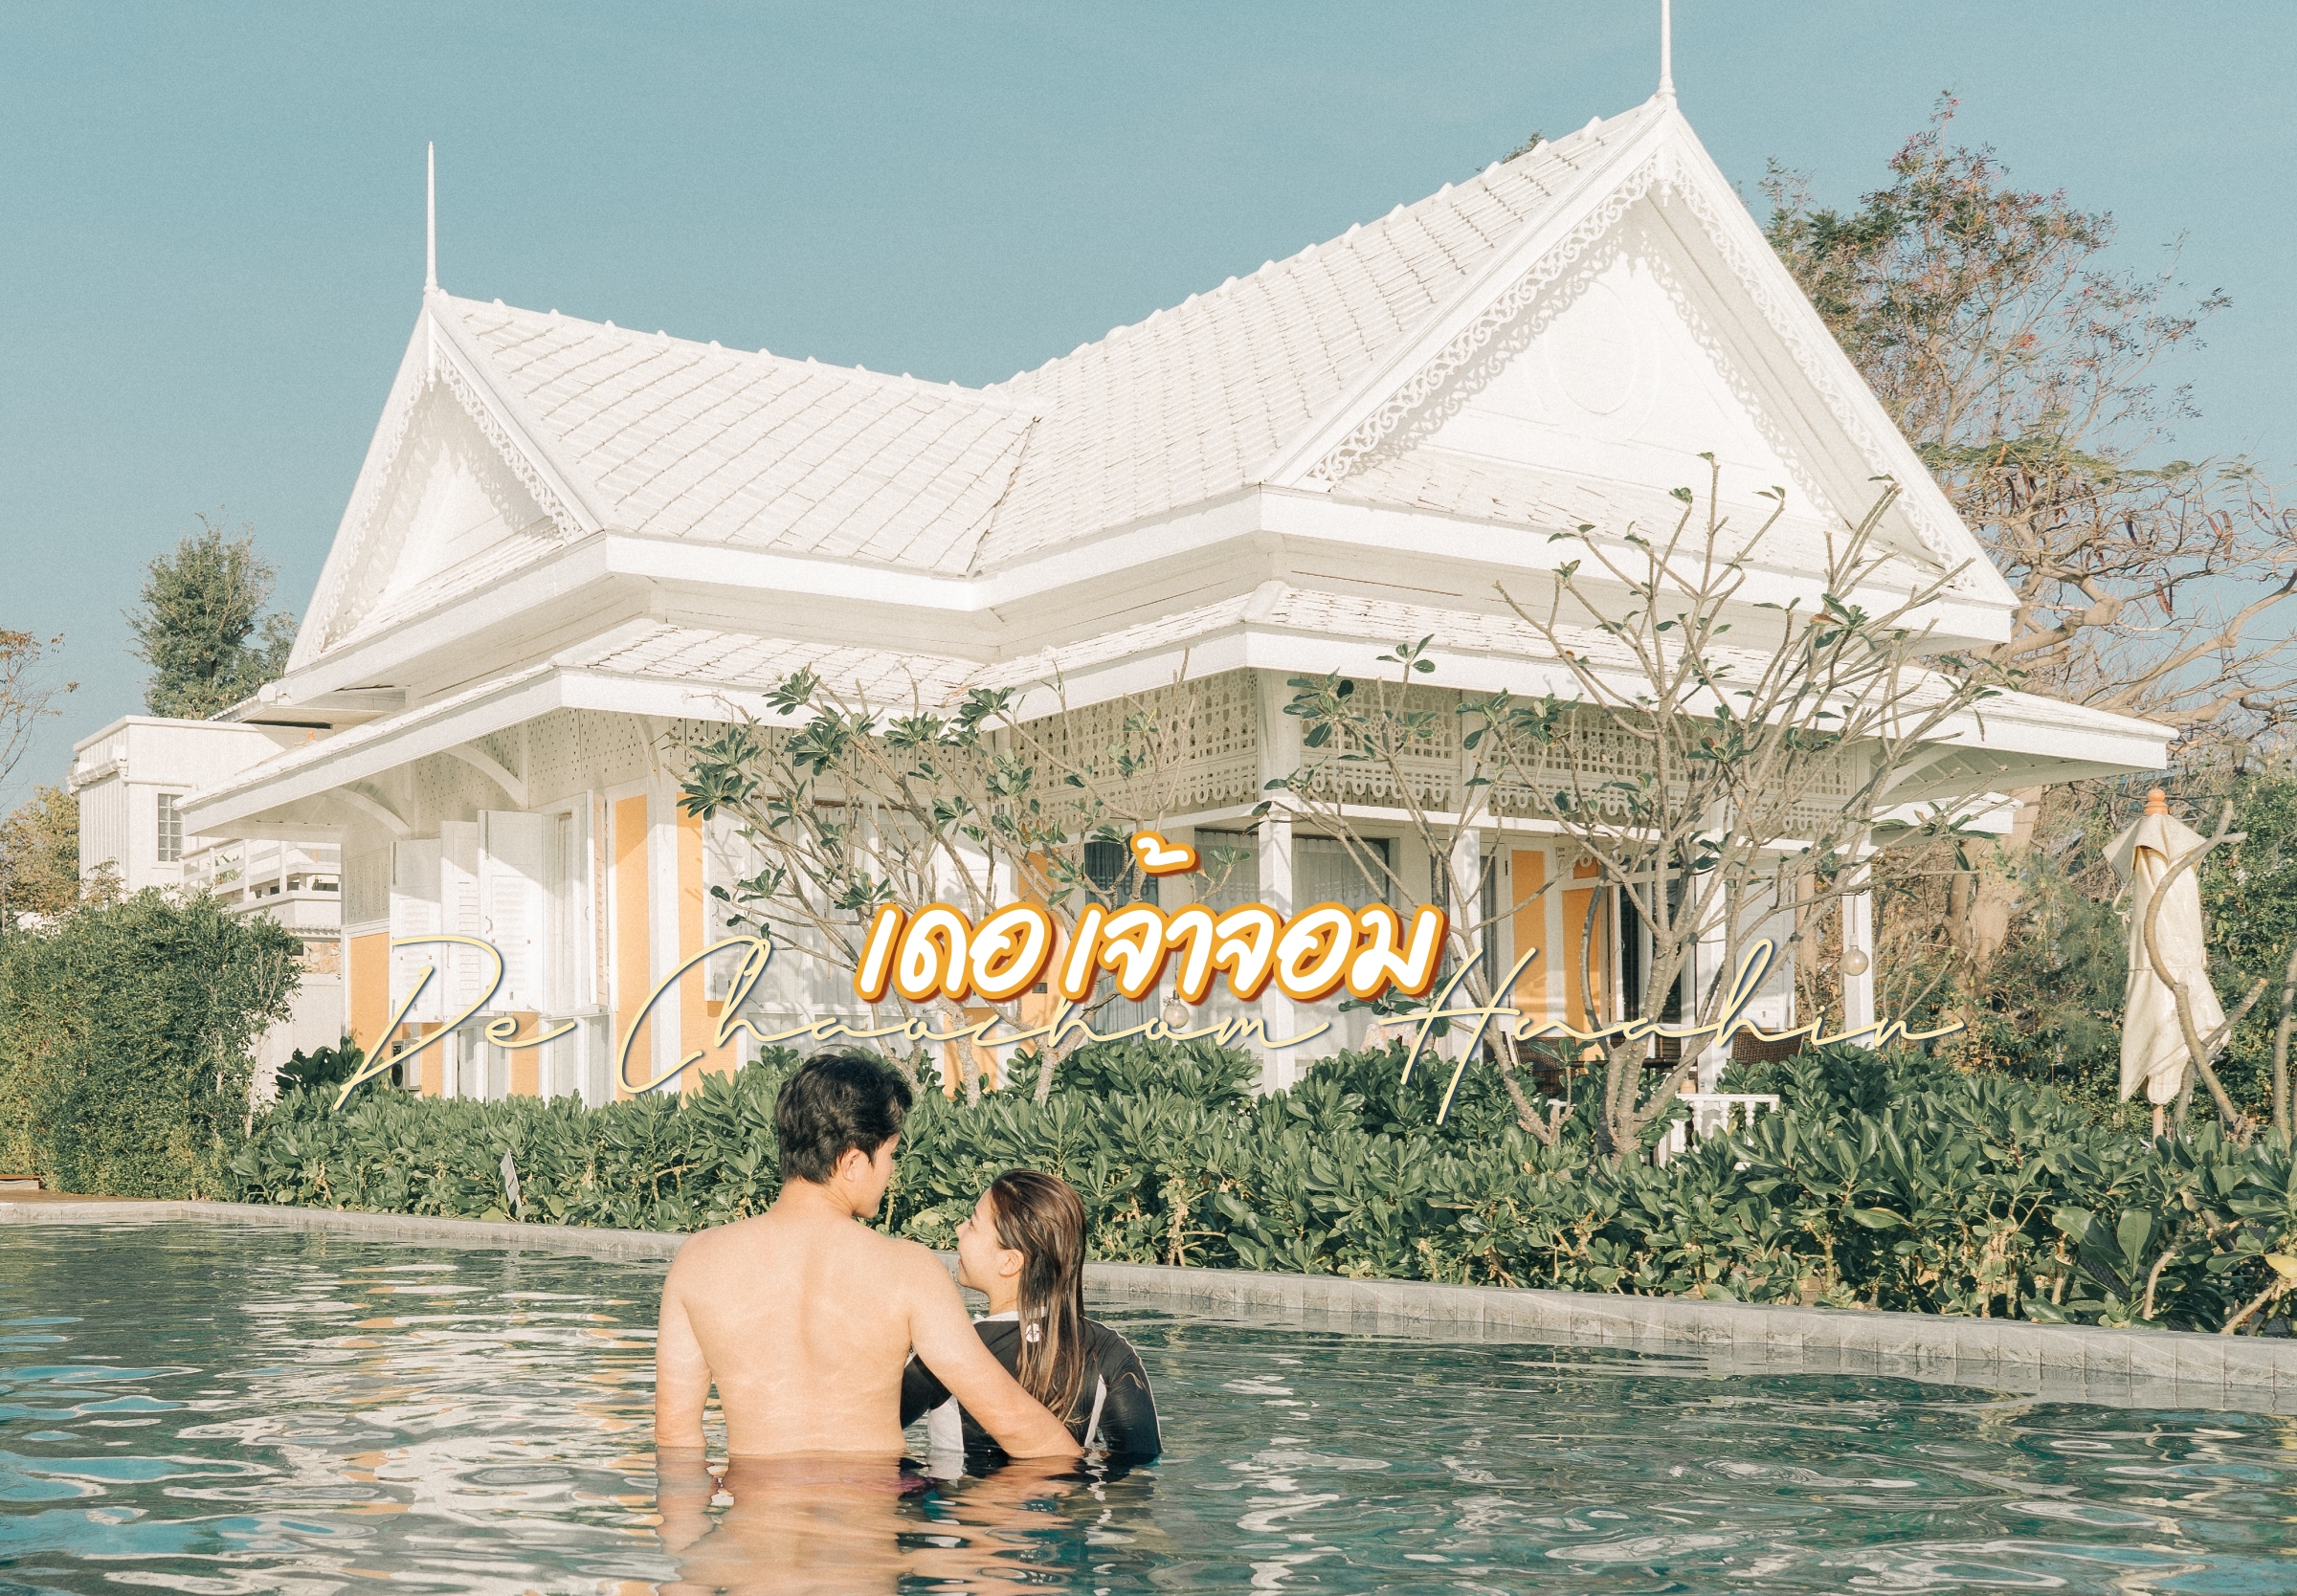 De Chaochom Huahin | โรงแรมริมทะเลที่ผสานกลิ่นอายไทยโบราณกับยุคสมัยใหม่ได้อย่างลงตัว - traveller / lifestyle